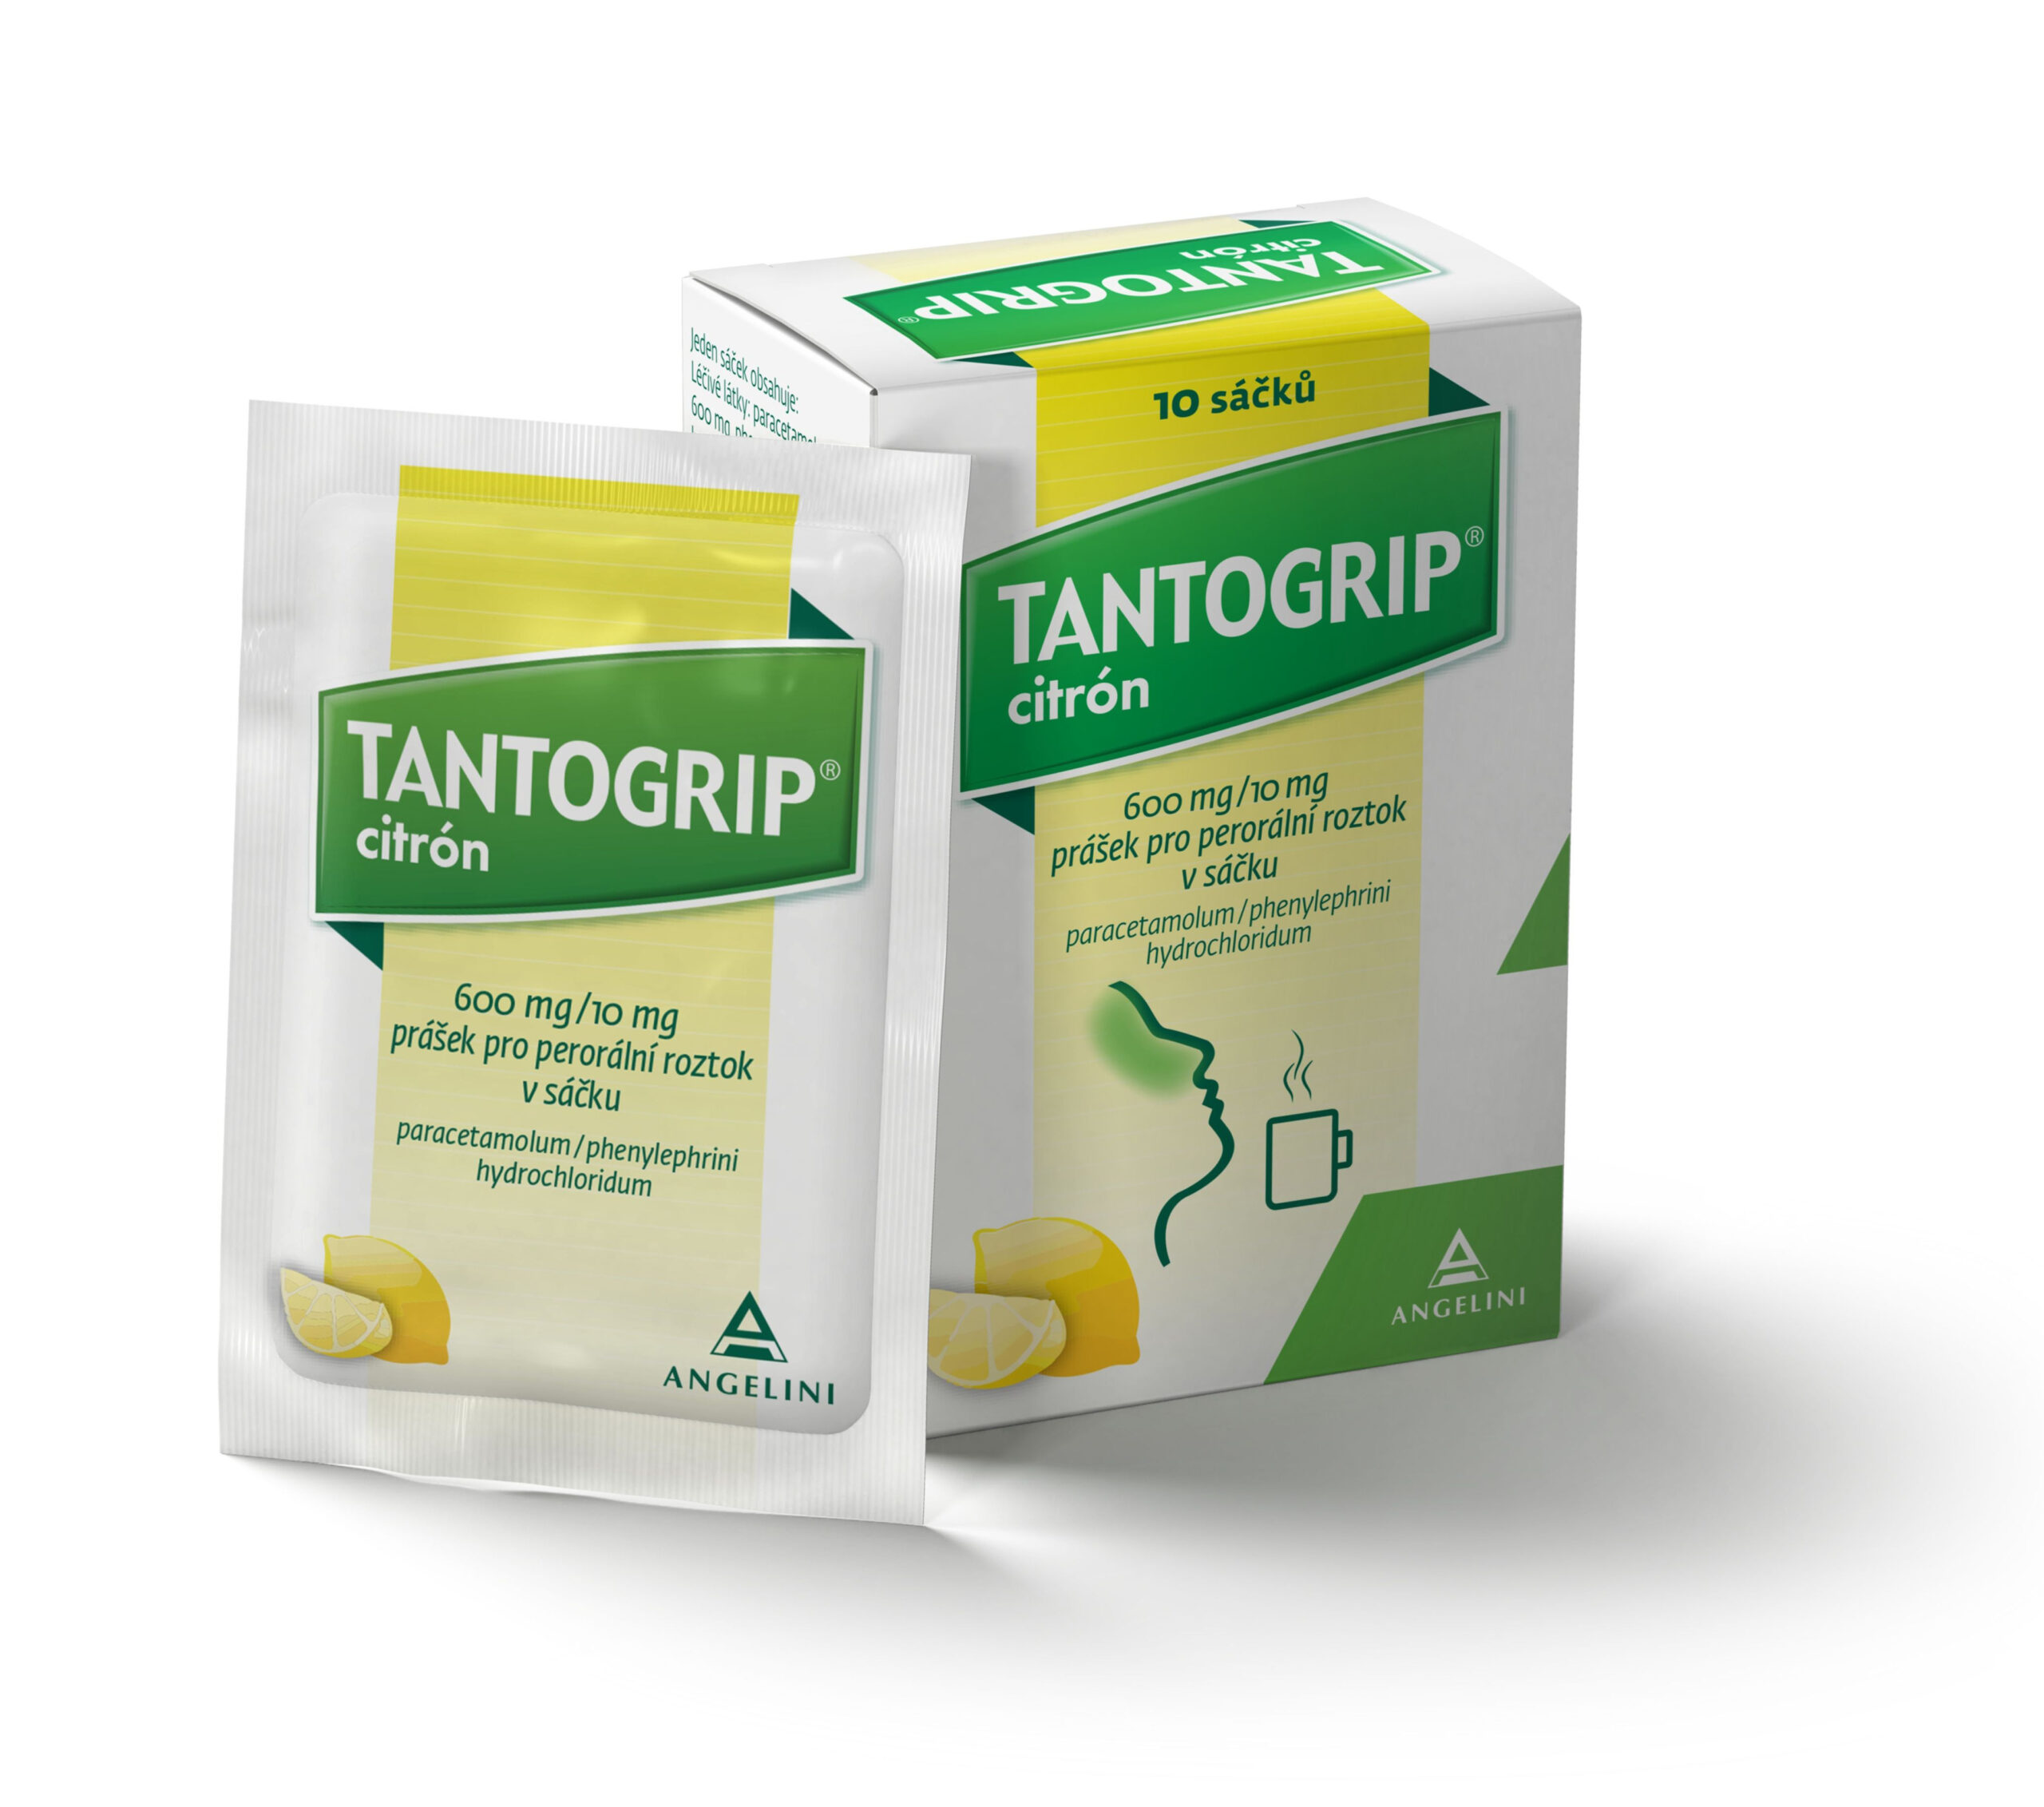 Tantogrip 600 mg/10 mg citron 10 sáčků Tantogrip